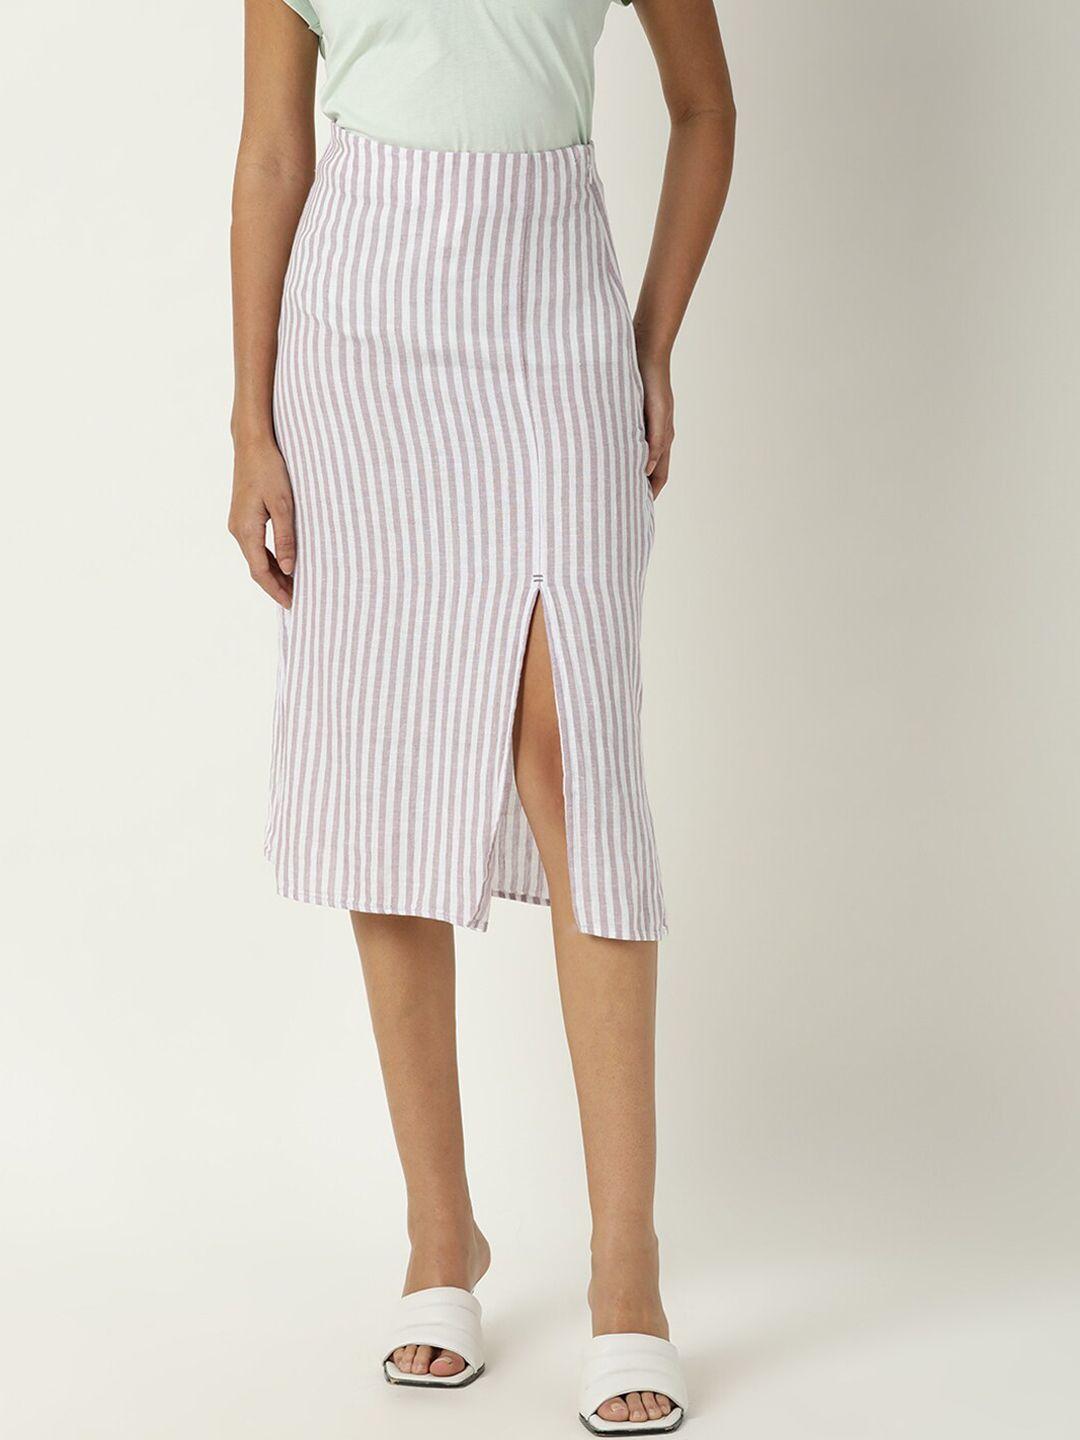 rareism women white & grey striped straight skirt